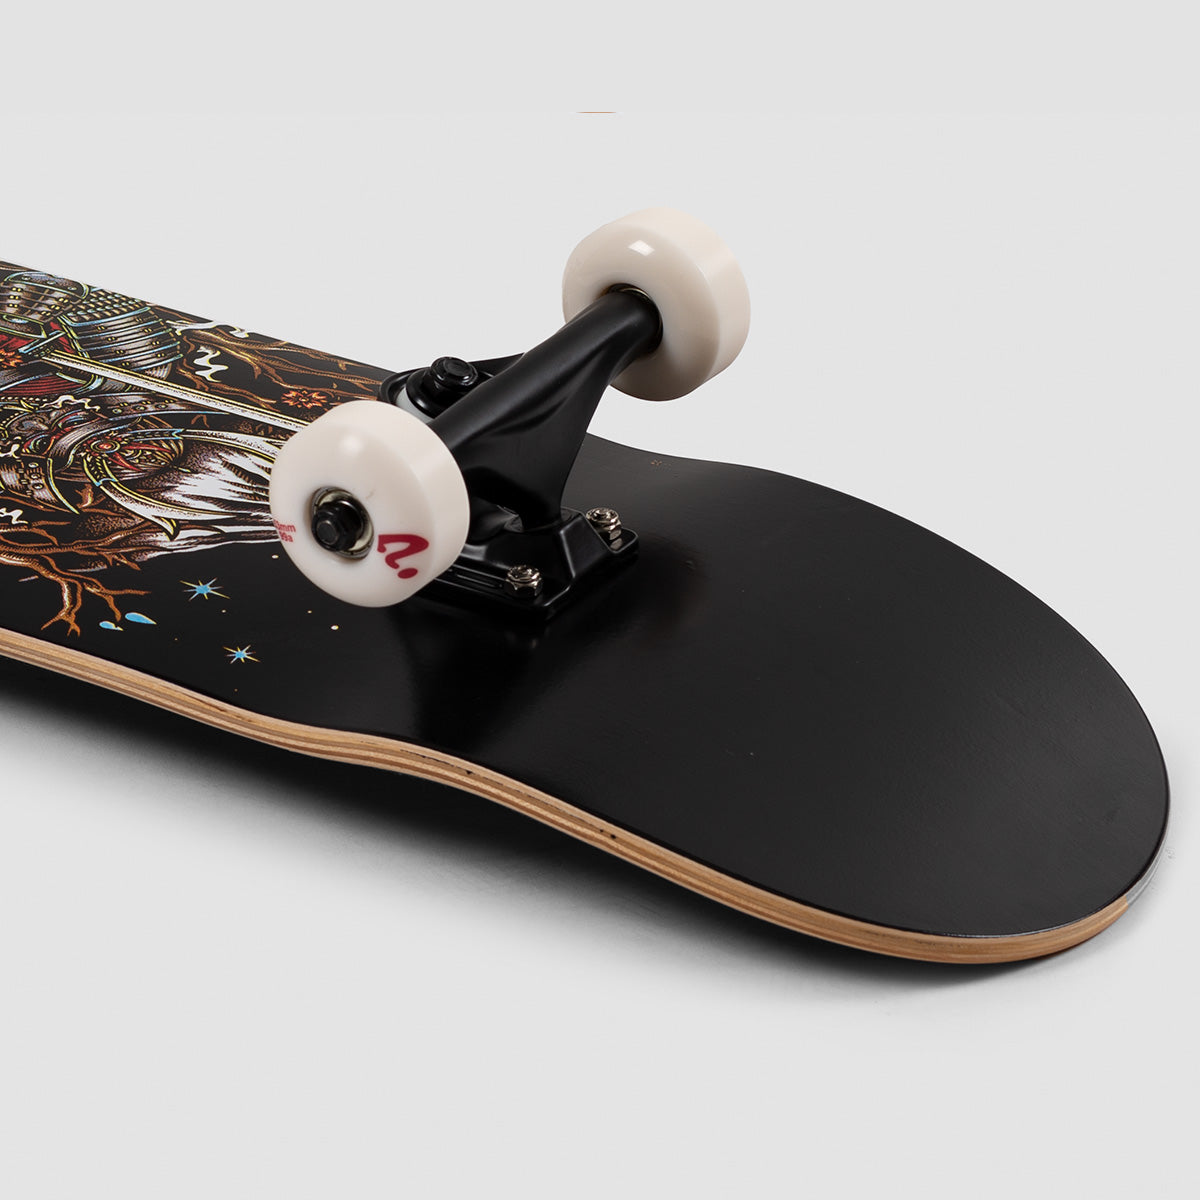 Enuff Nihon Skateboard Samurai - 7.75"